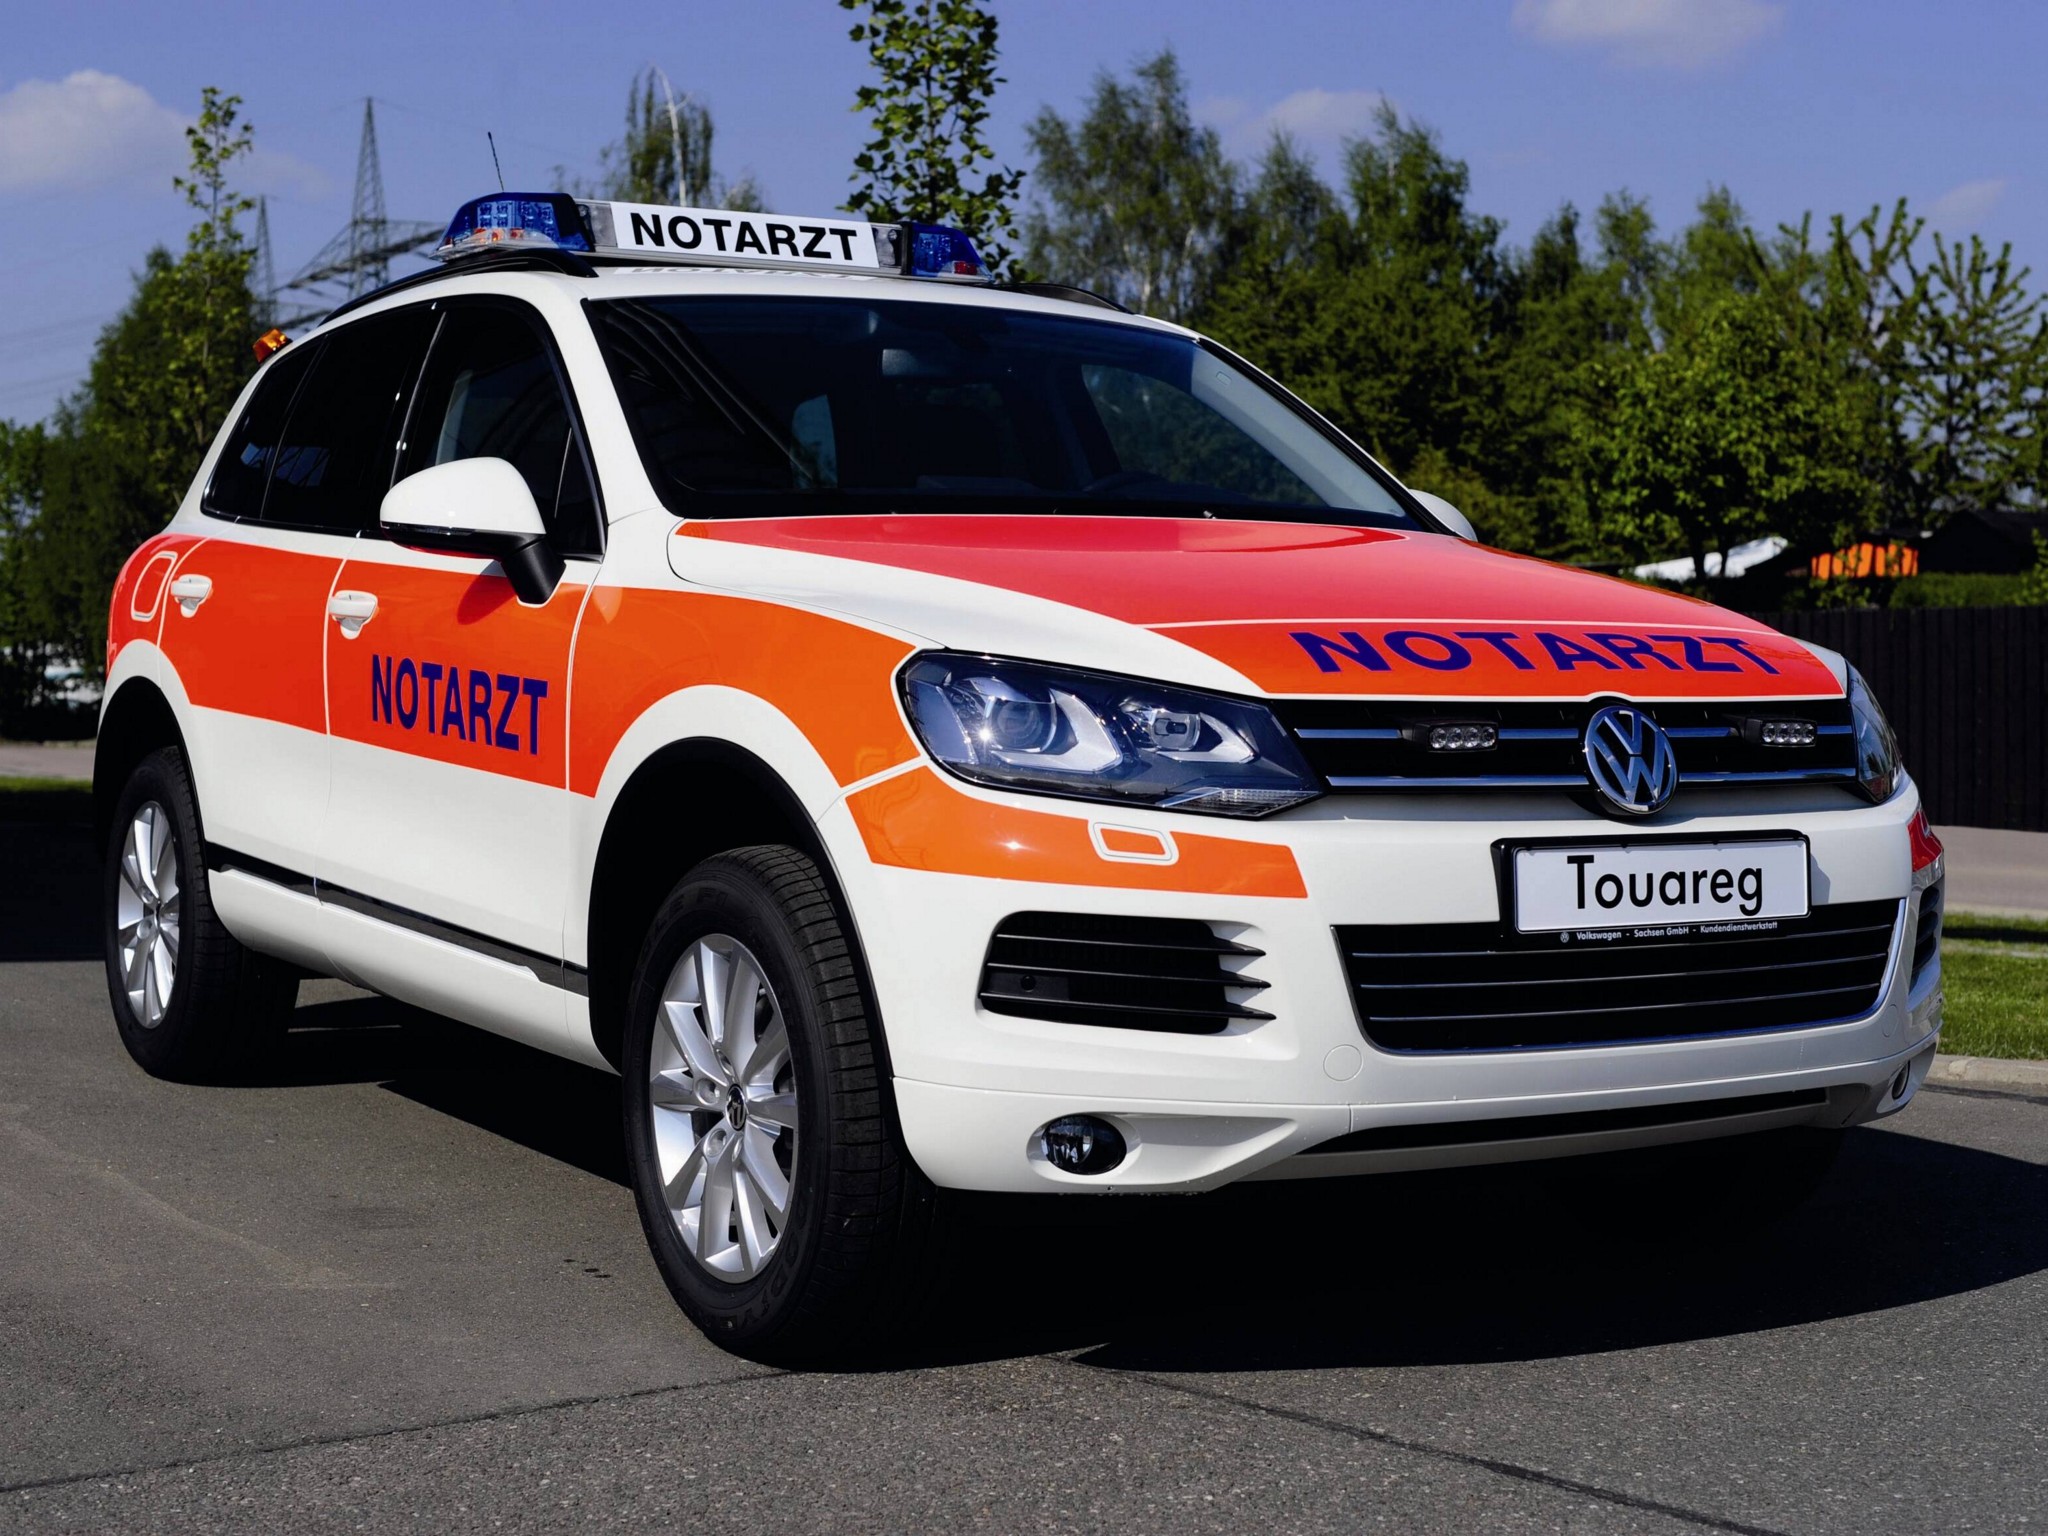 2011, Volkswagen, Touareg, Notarzt, Ambulance, Emergency, Suv Wallpaper